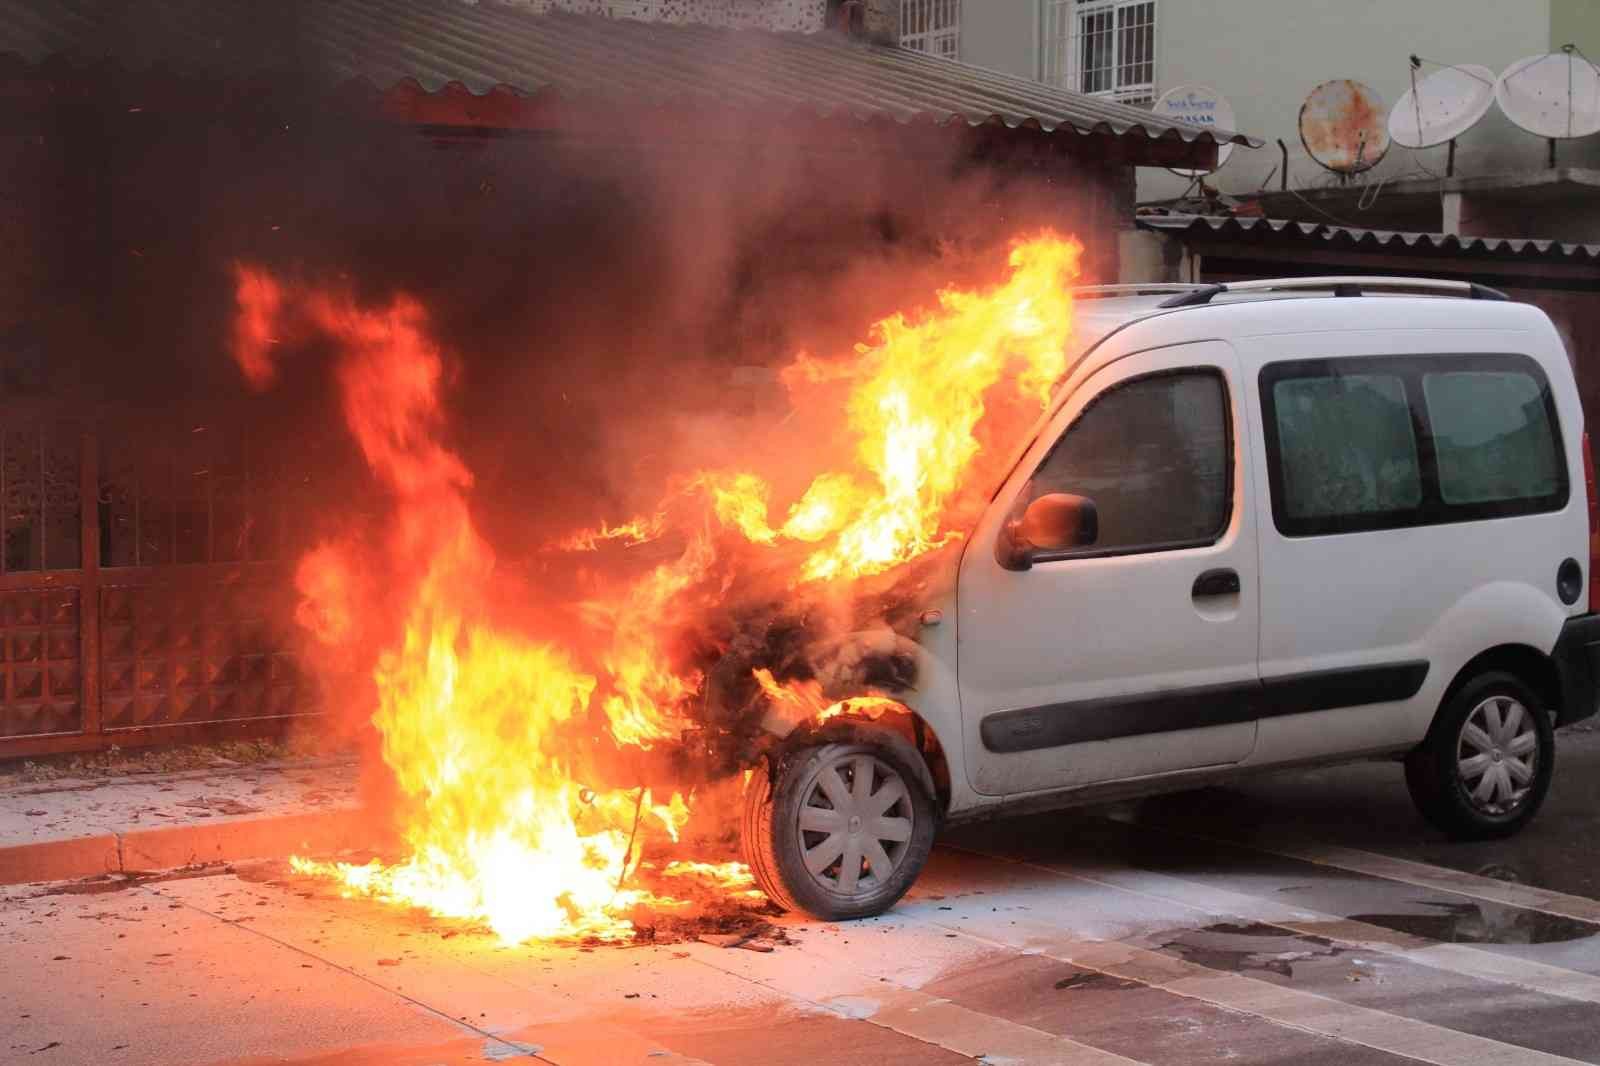 Kartal’da seyir halinde olan otomobil alev alev yandı #istanbul